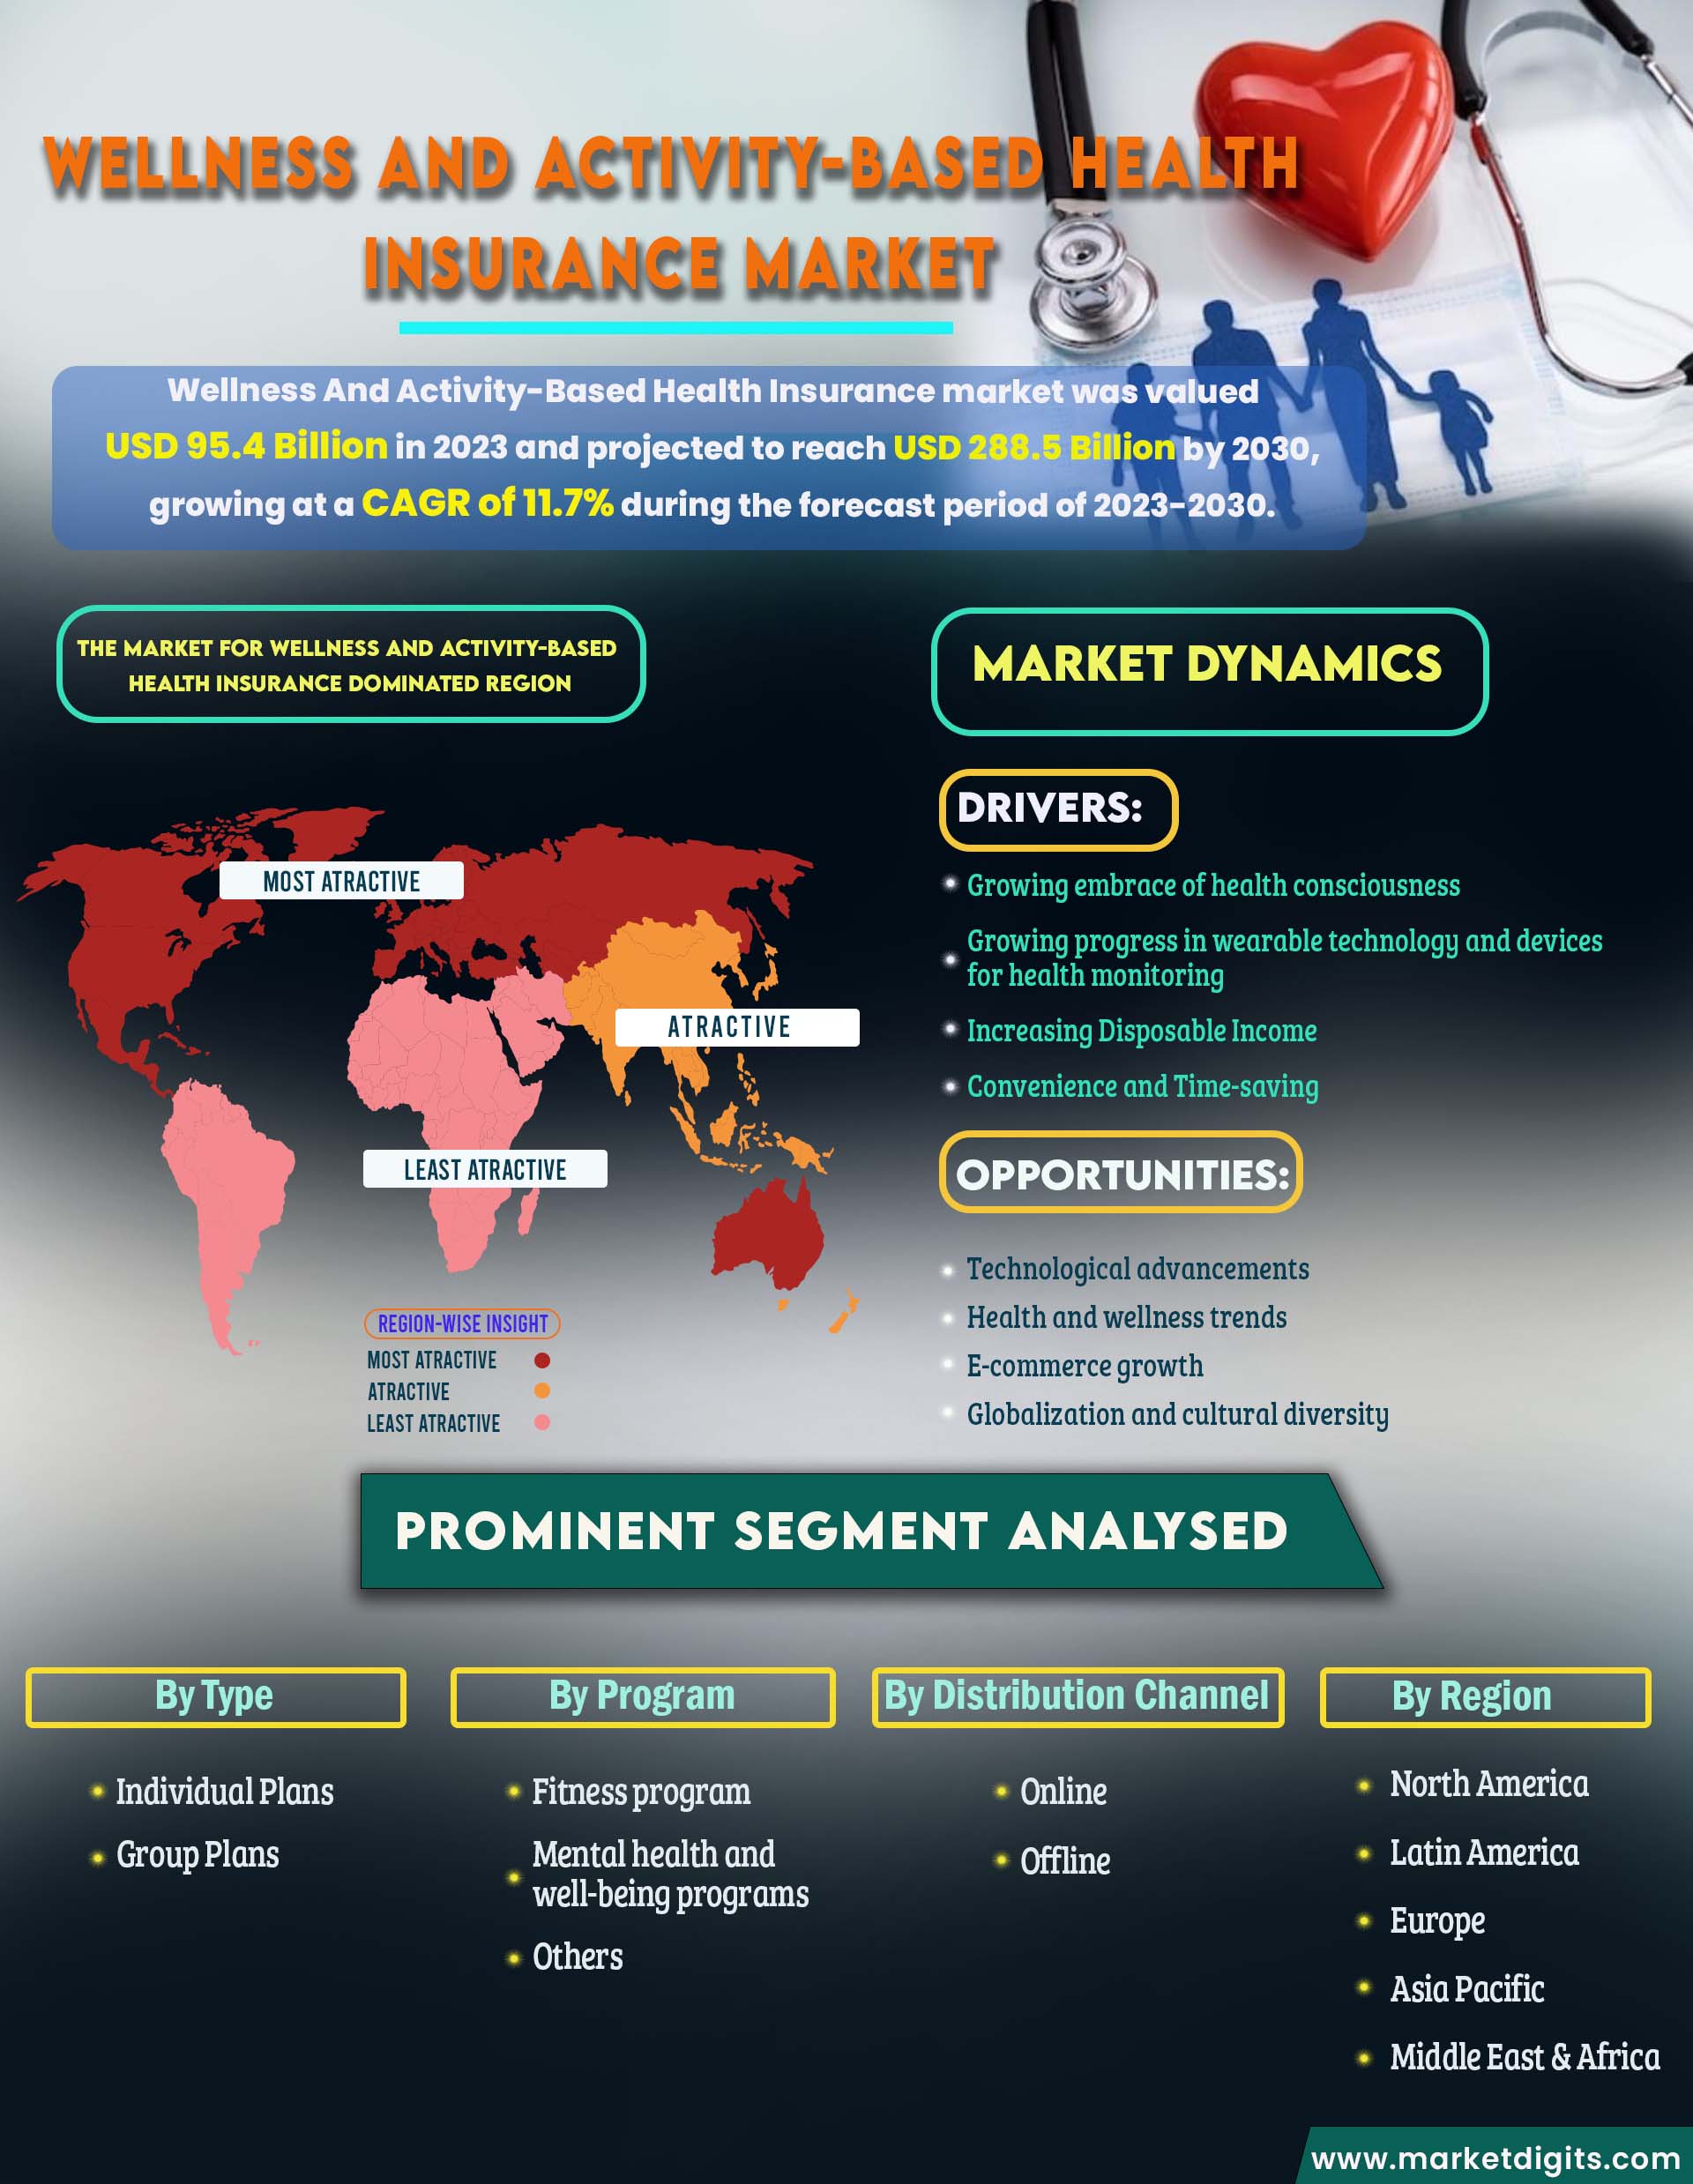 Wellness And Activity-Based Health Insurance Market